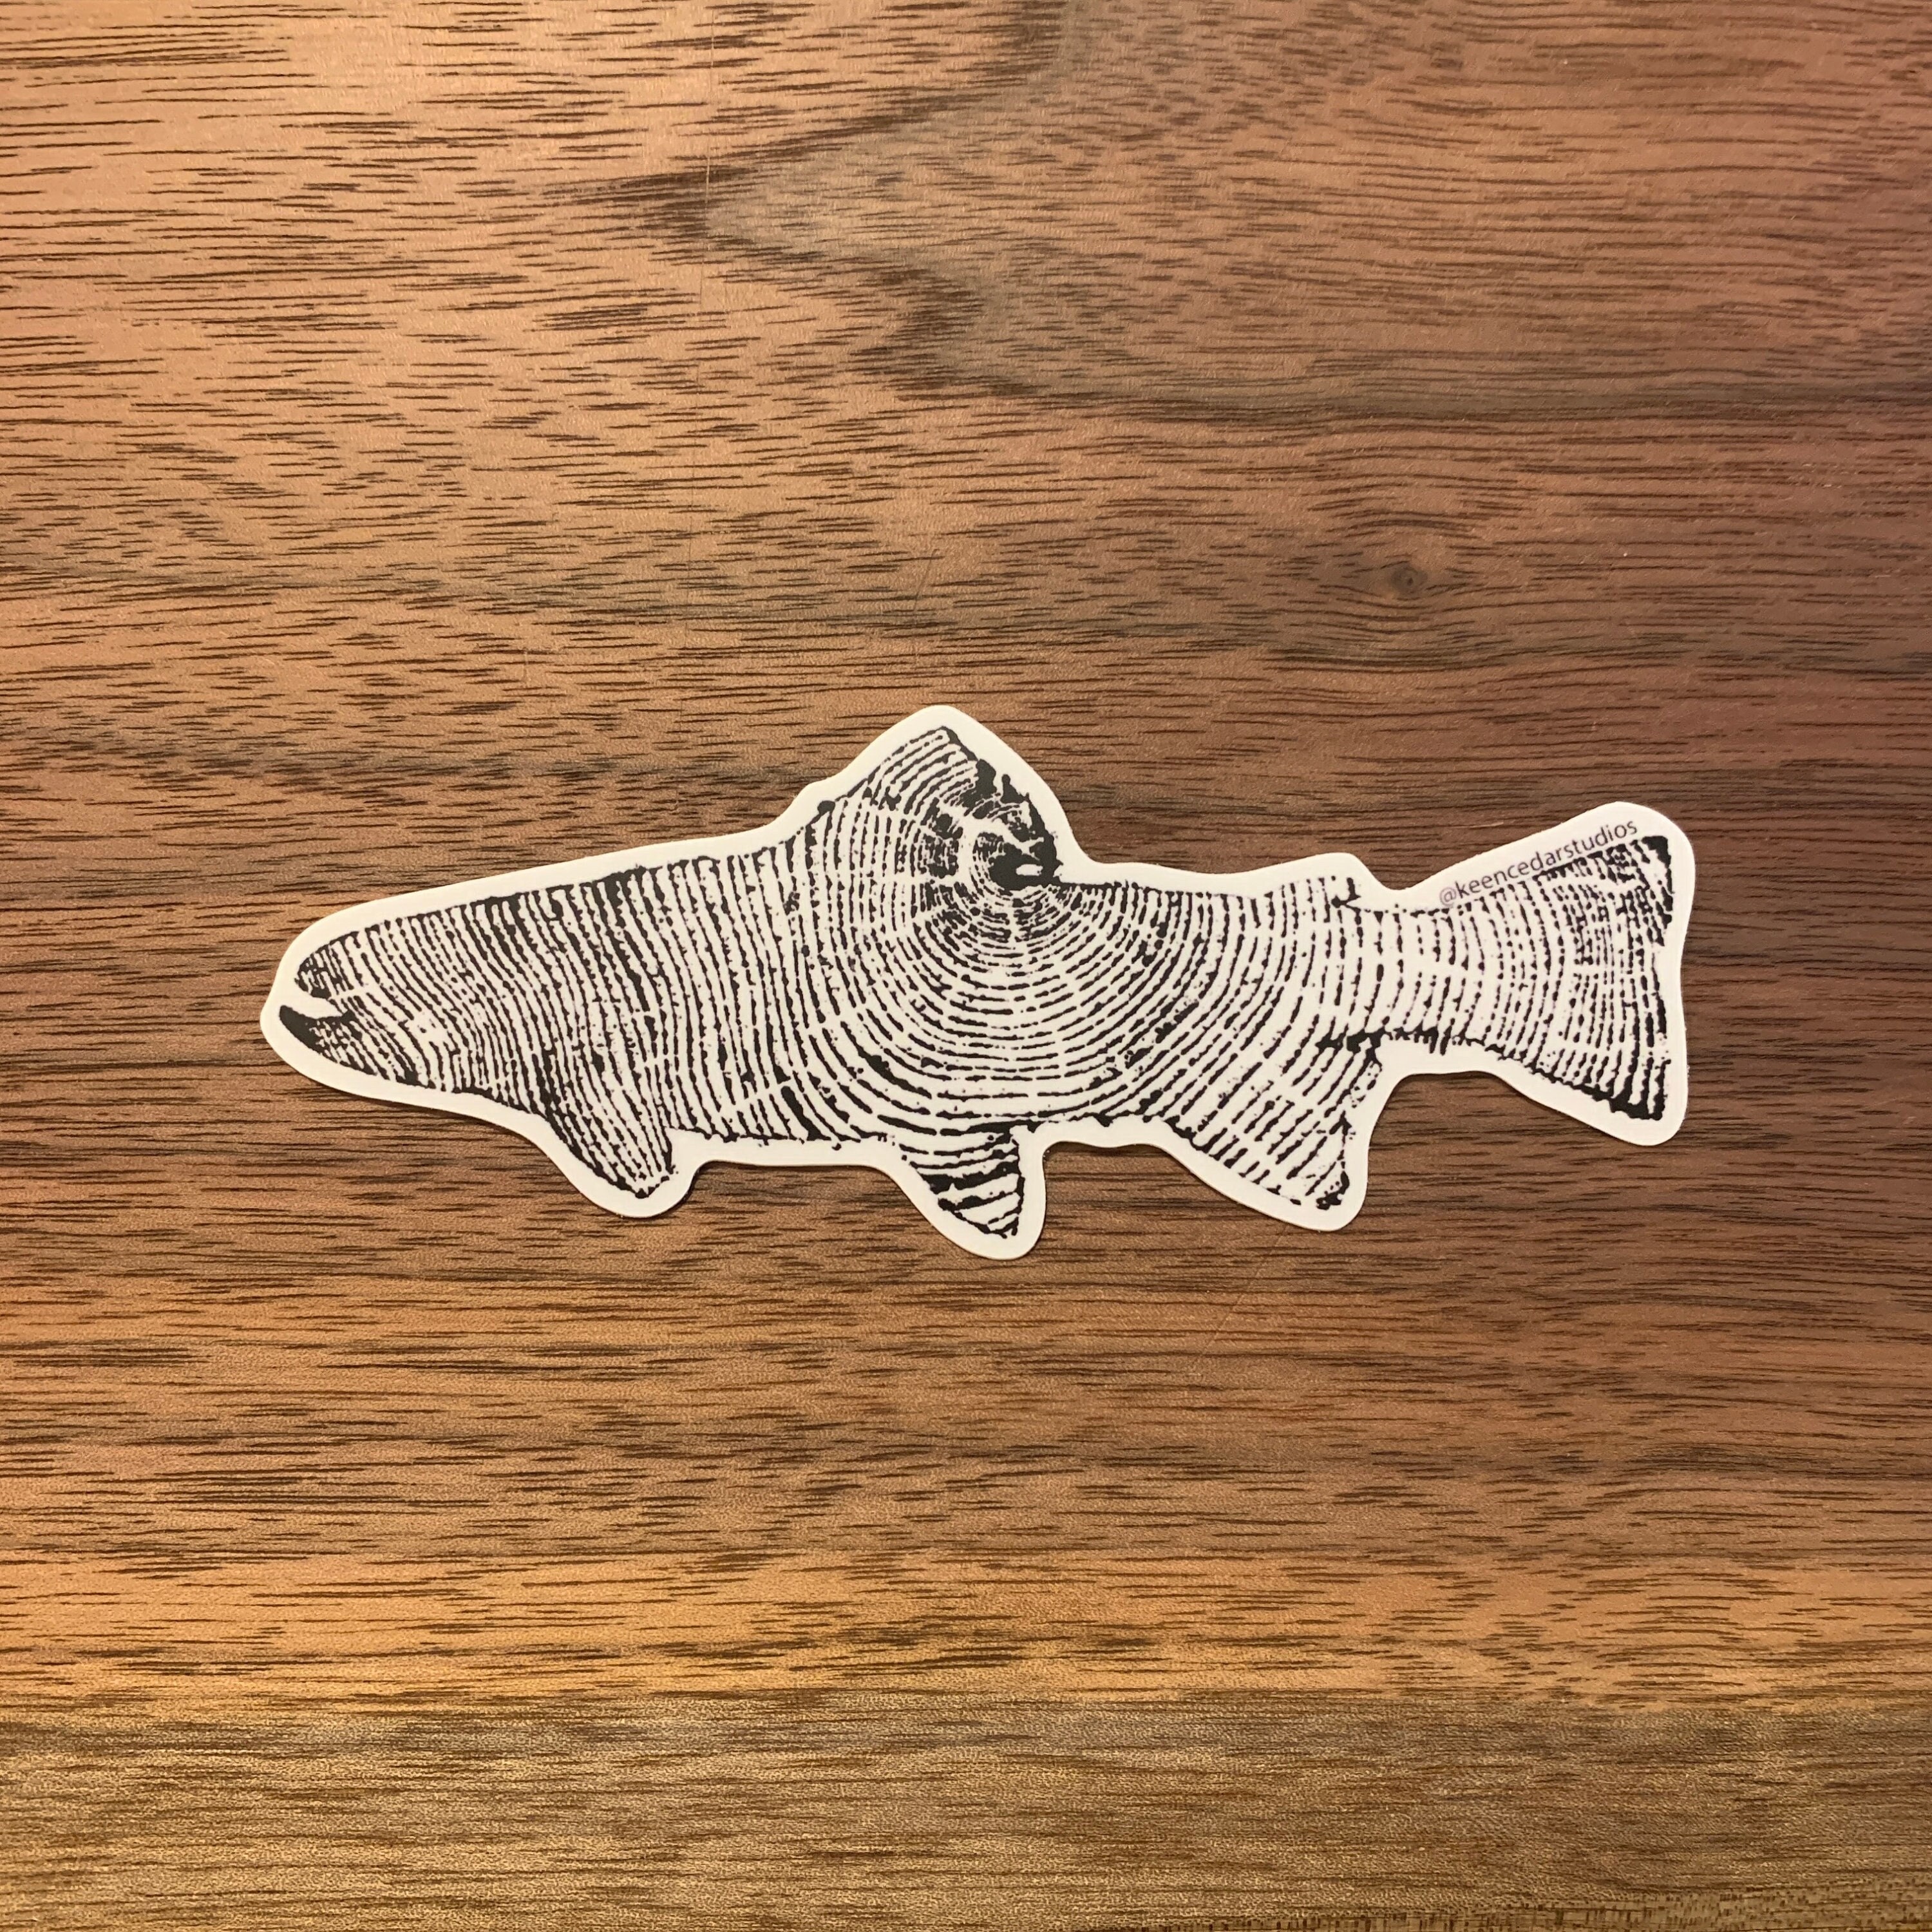 Fly fishing sticker bundle